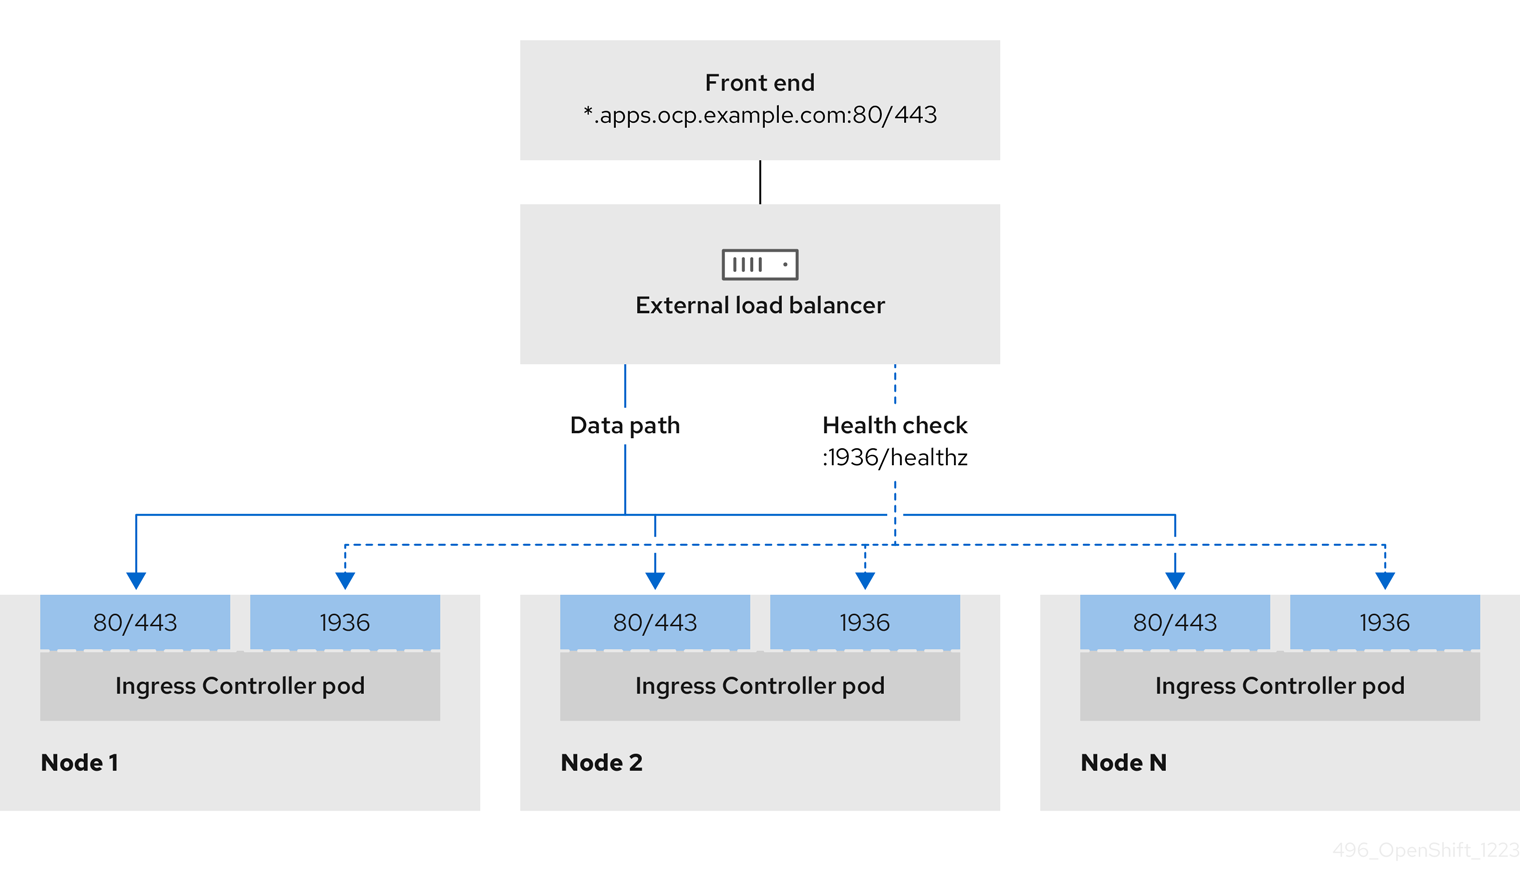 显示 OpenShift Container Platform 环境中运行 Ingress Controller 的示例网络工作流的镜像。